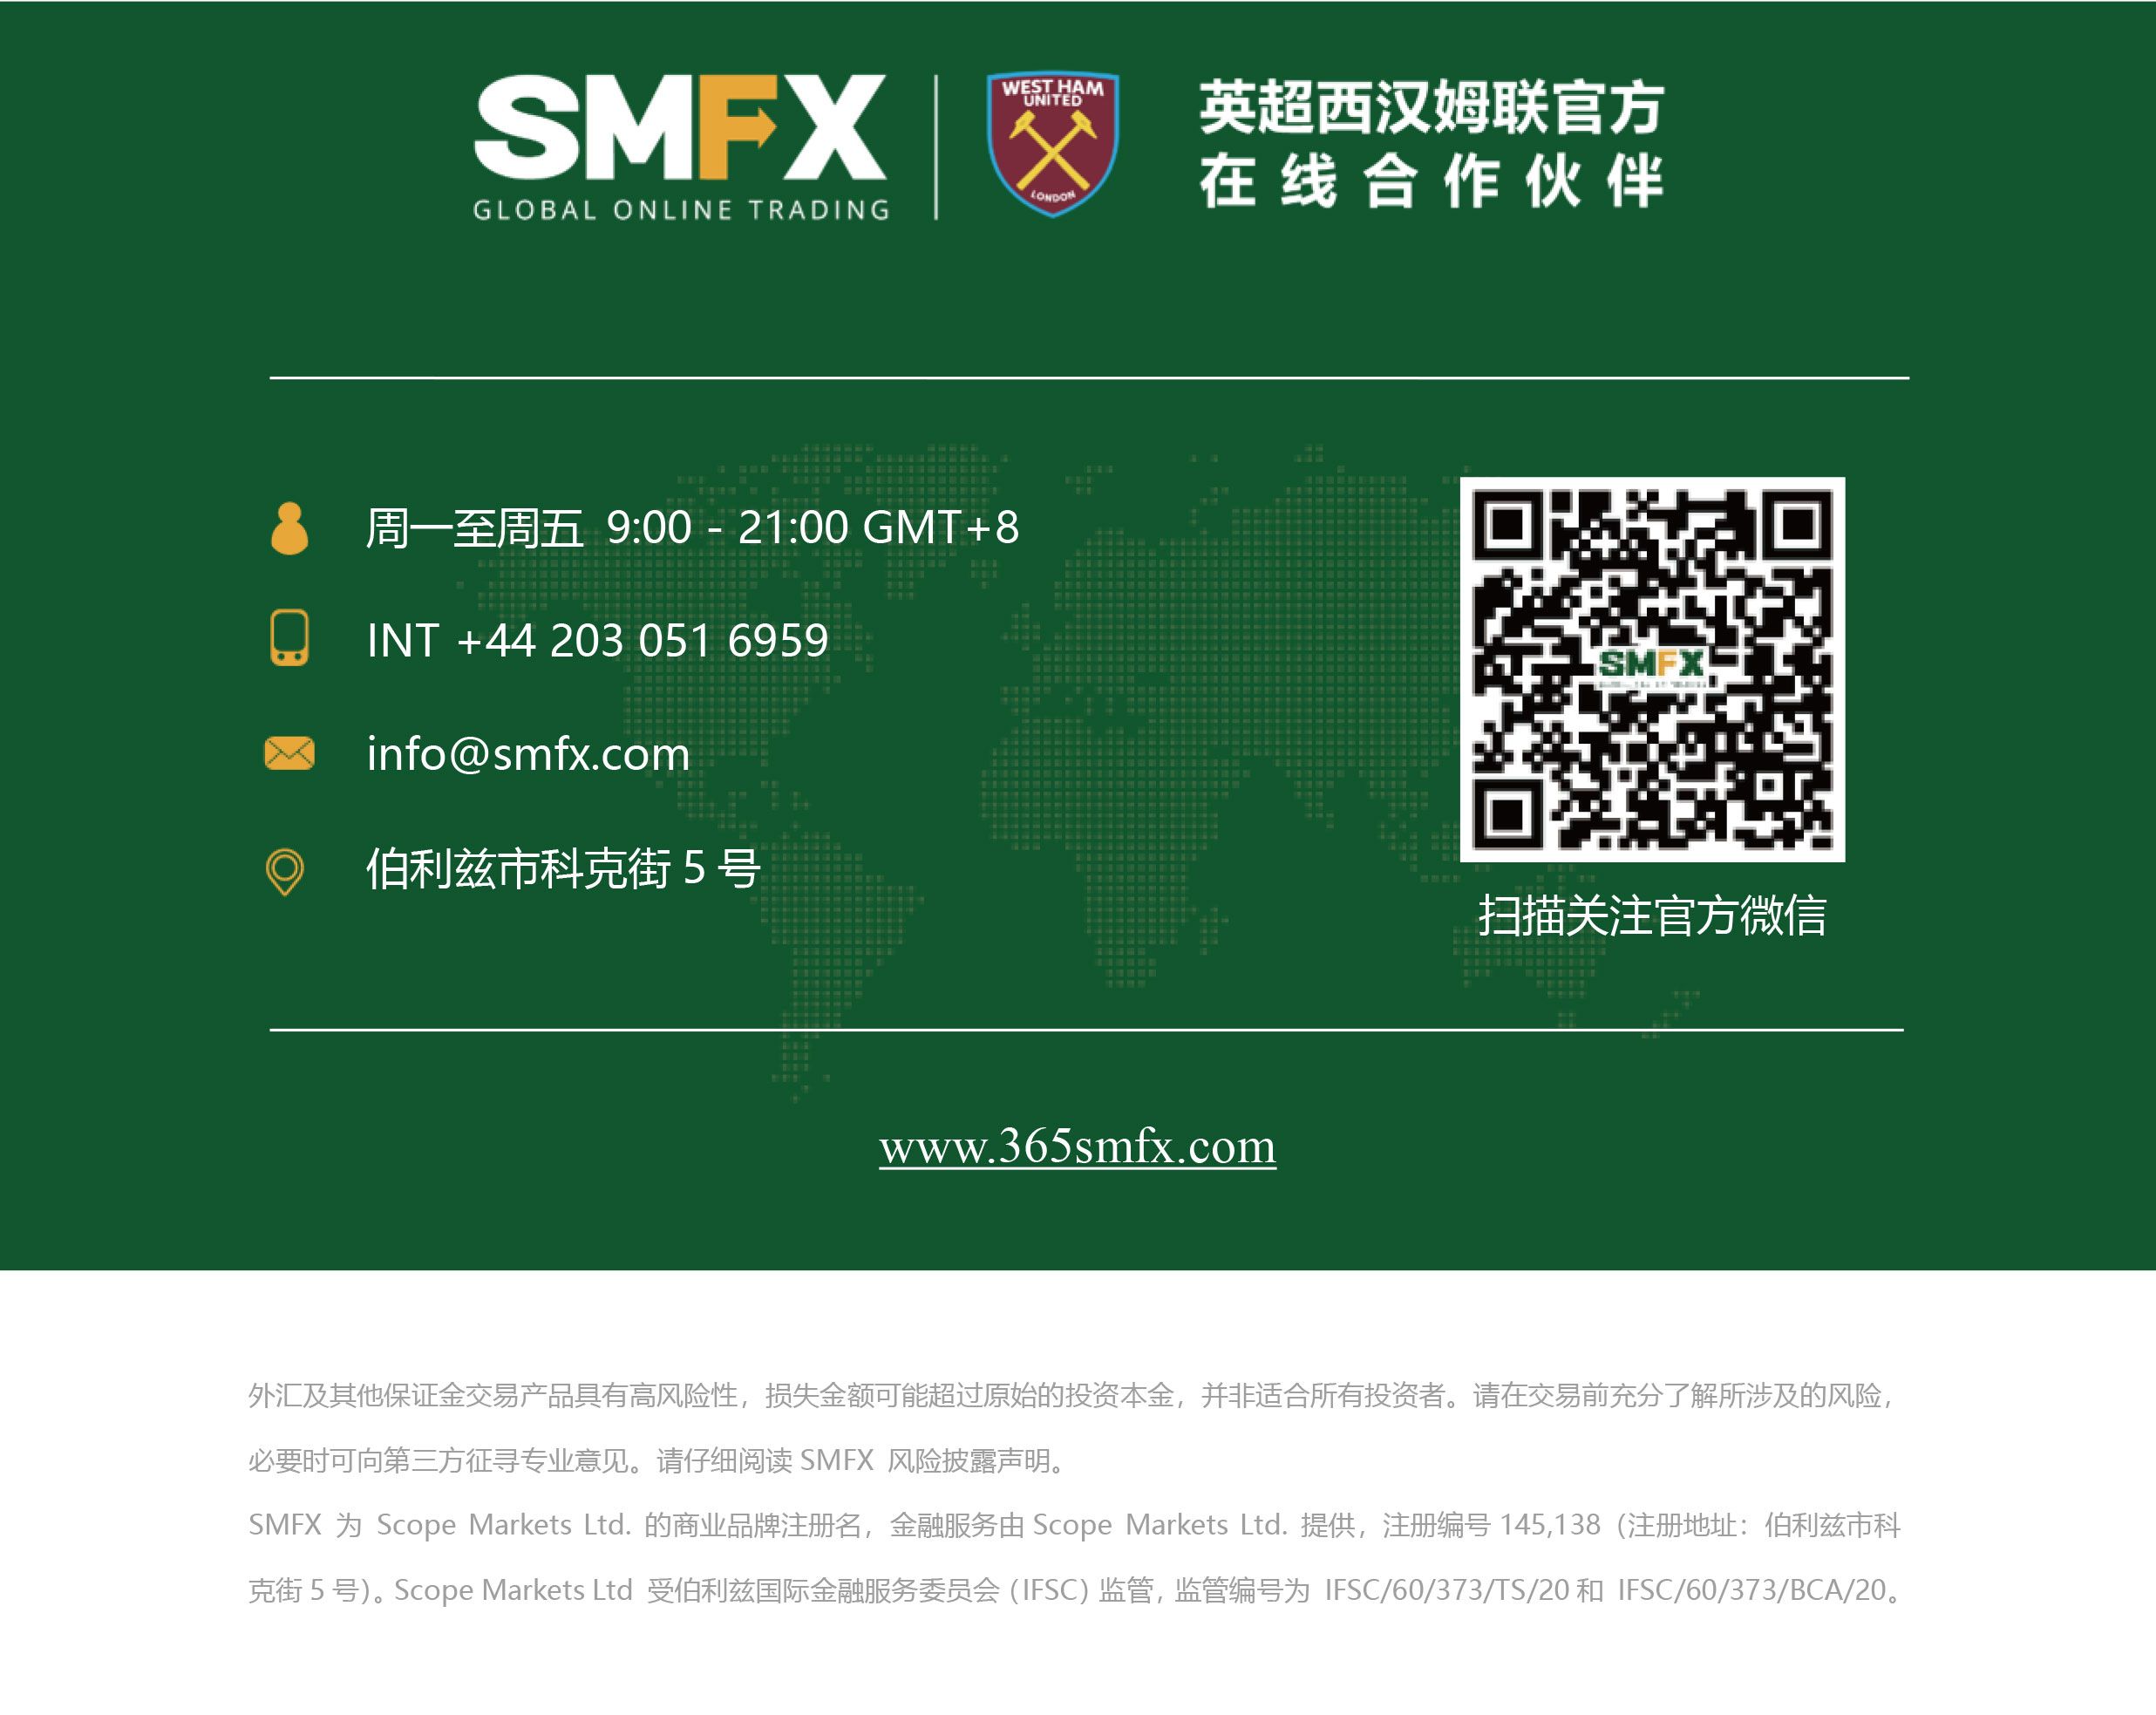 SMFX【策略研究报告】丨2020.09.29